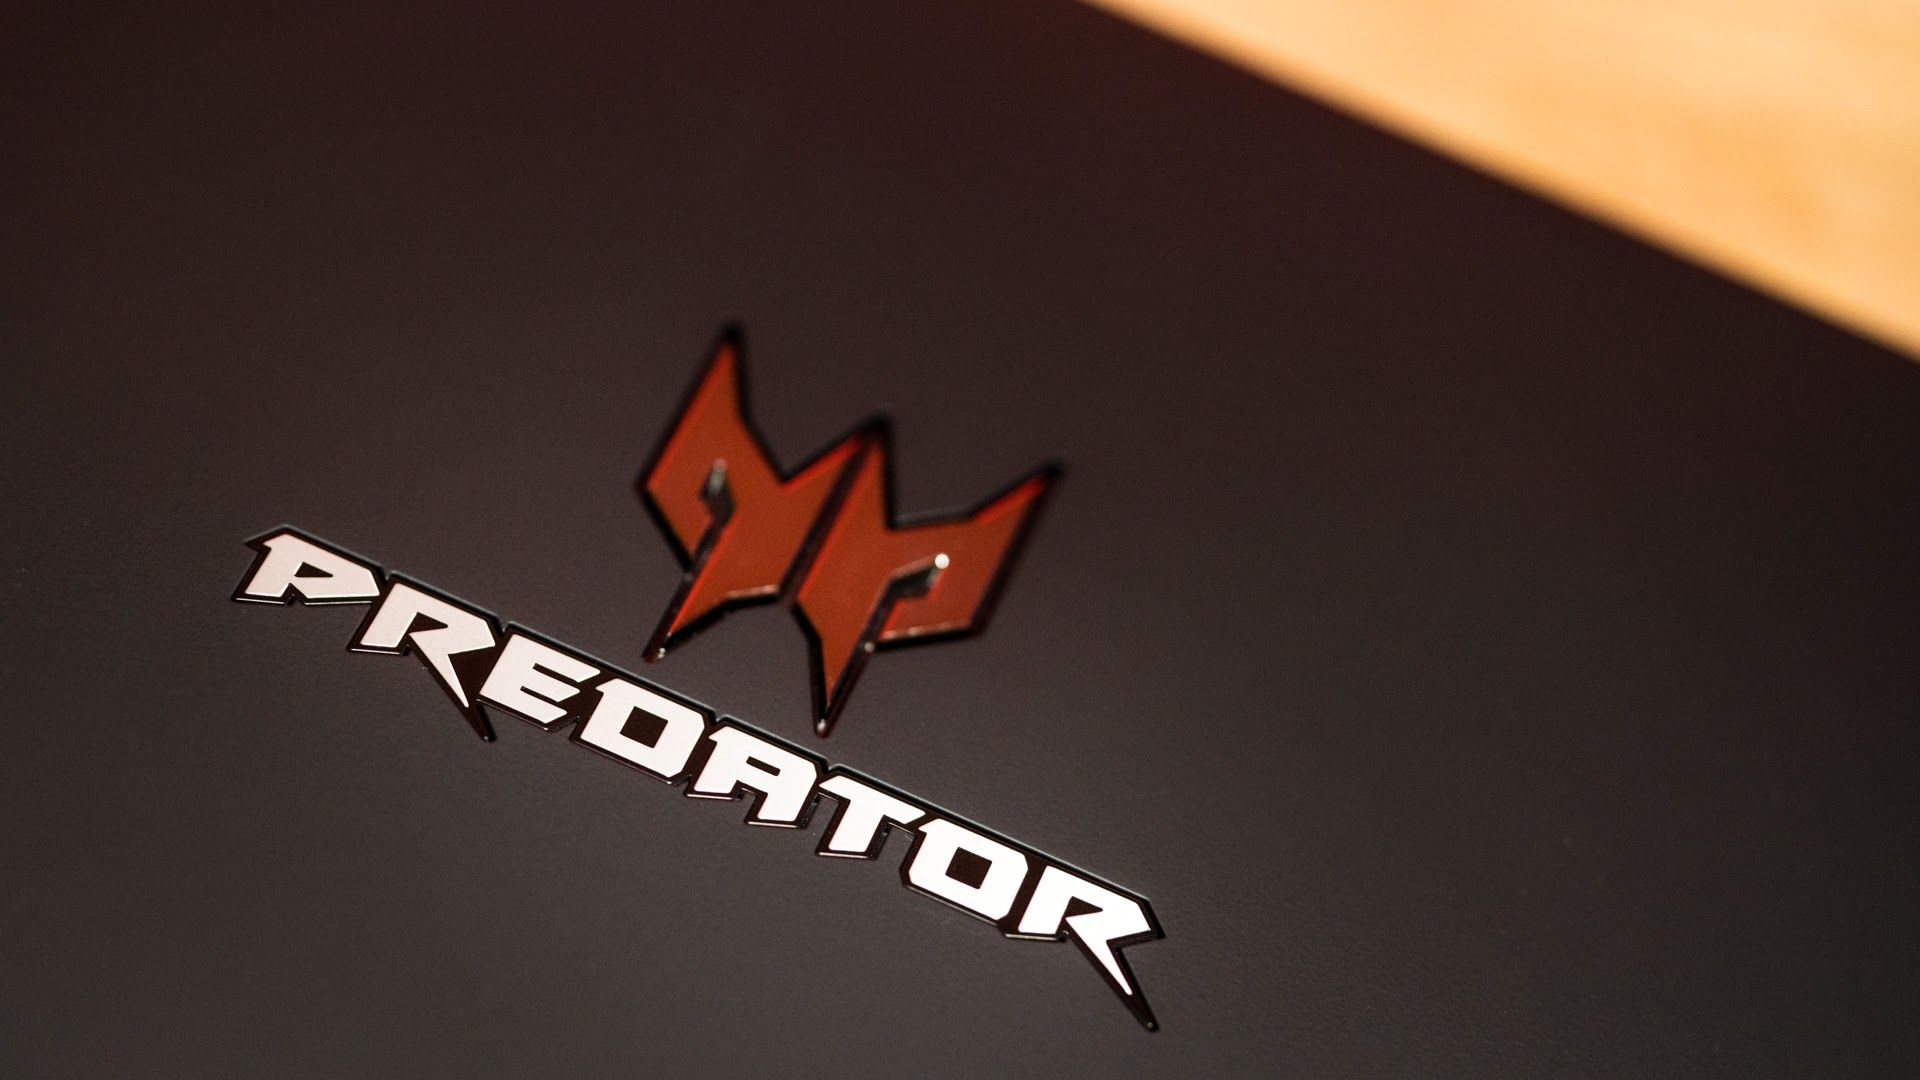 Acer Predator Wallpaper. Acer Laptop